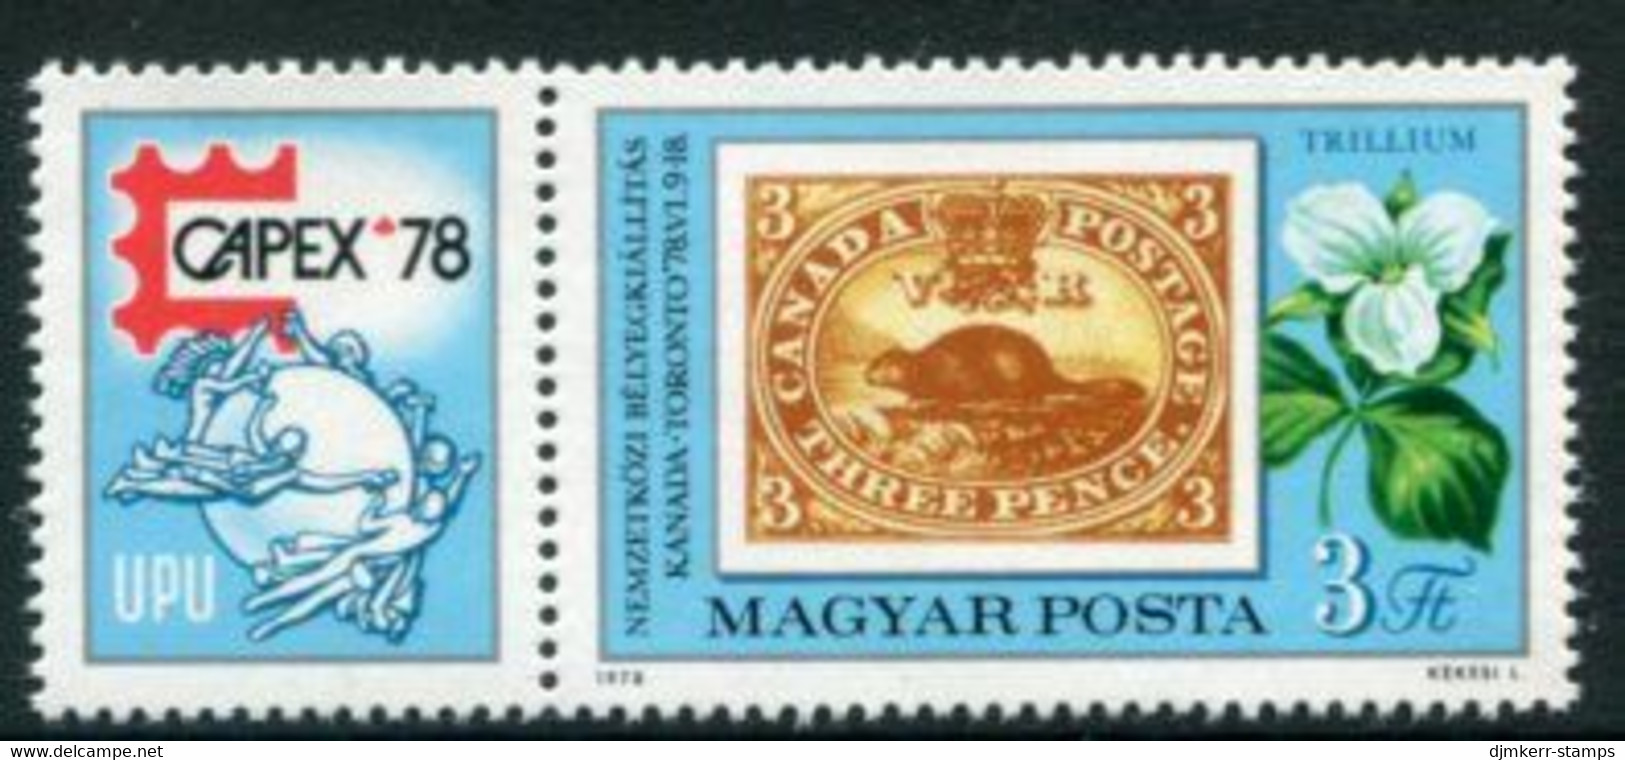 HUNGARY 1978 CAPEX Stamp Exhibition  MNH /**  Michel 3293 - Ungebraucht